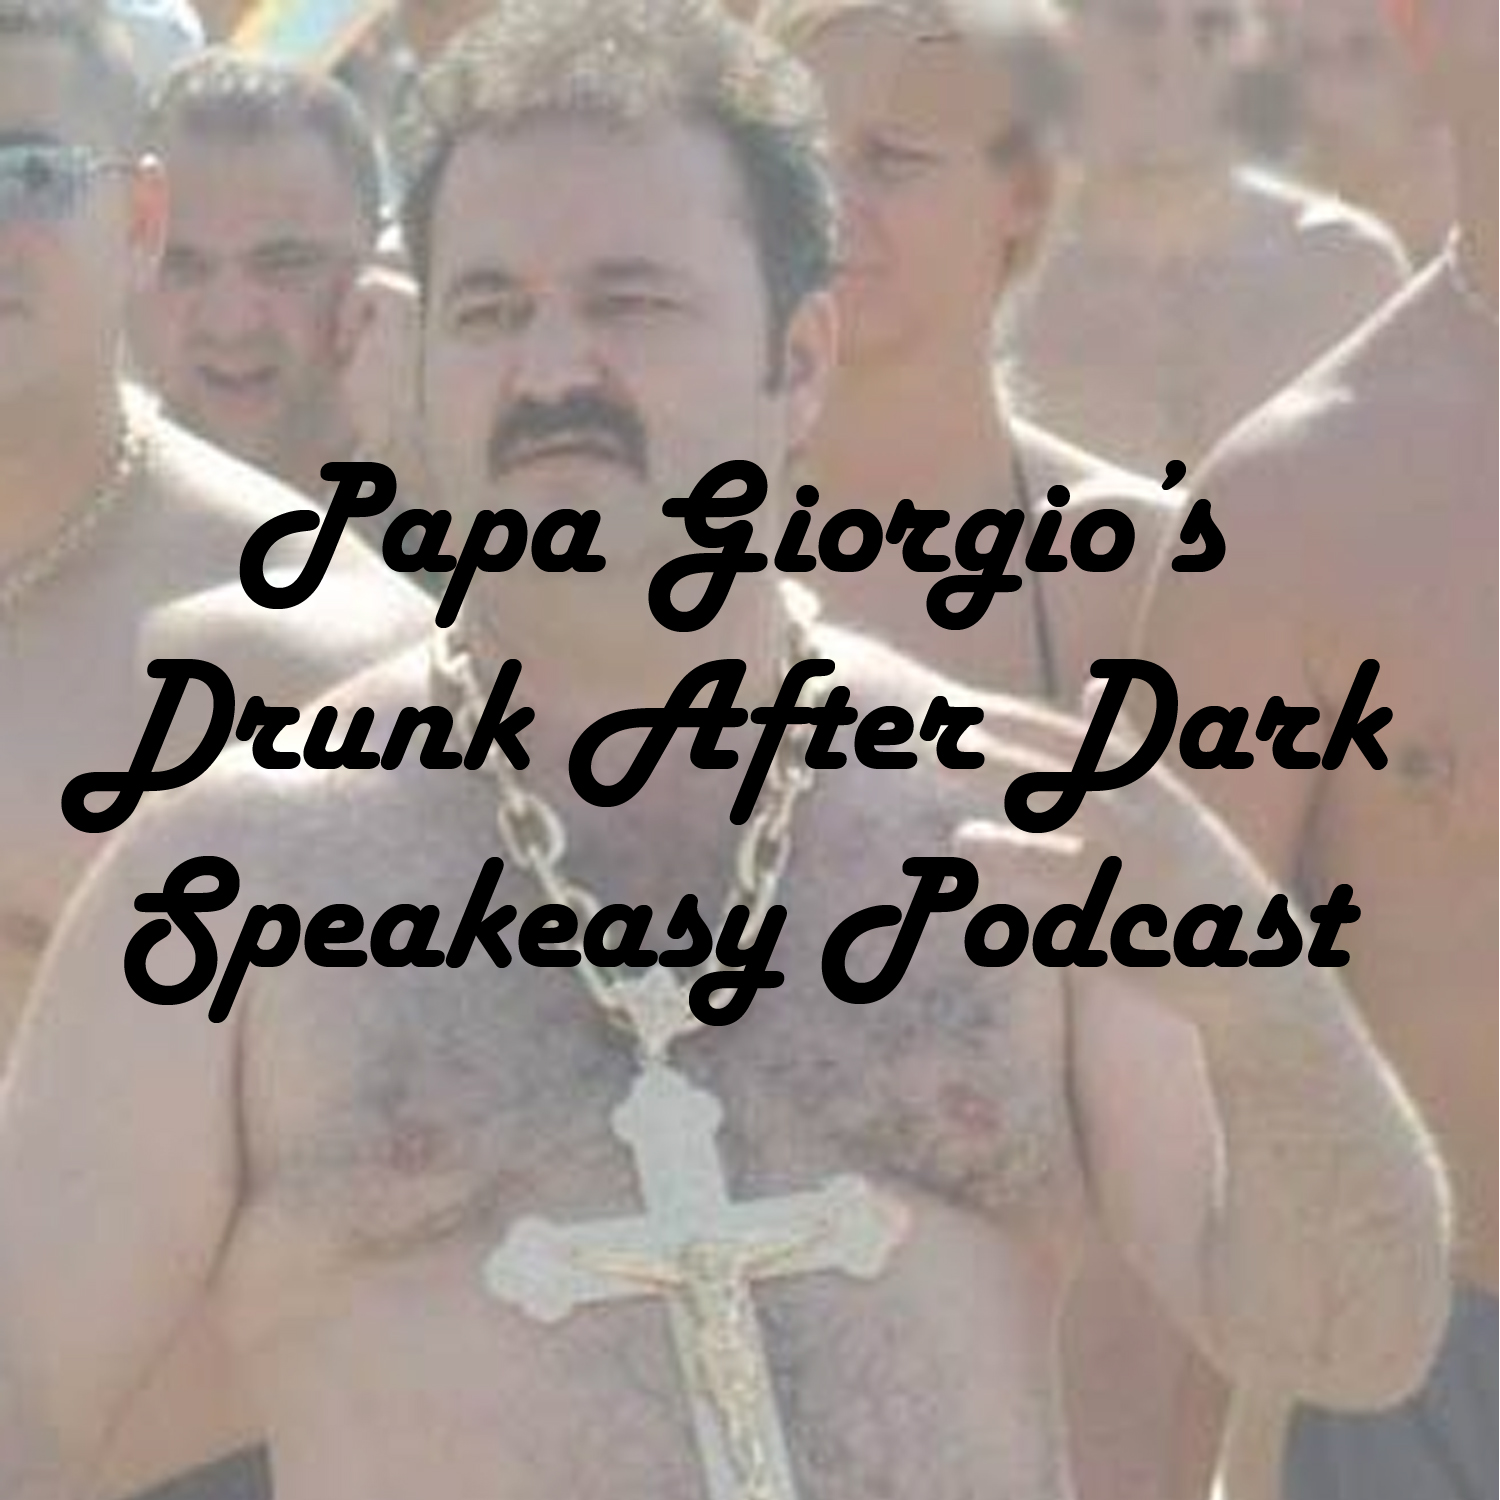 Papa Giorgio's Drunk After Dark Speakeasy Podcast